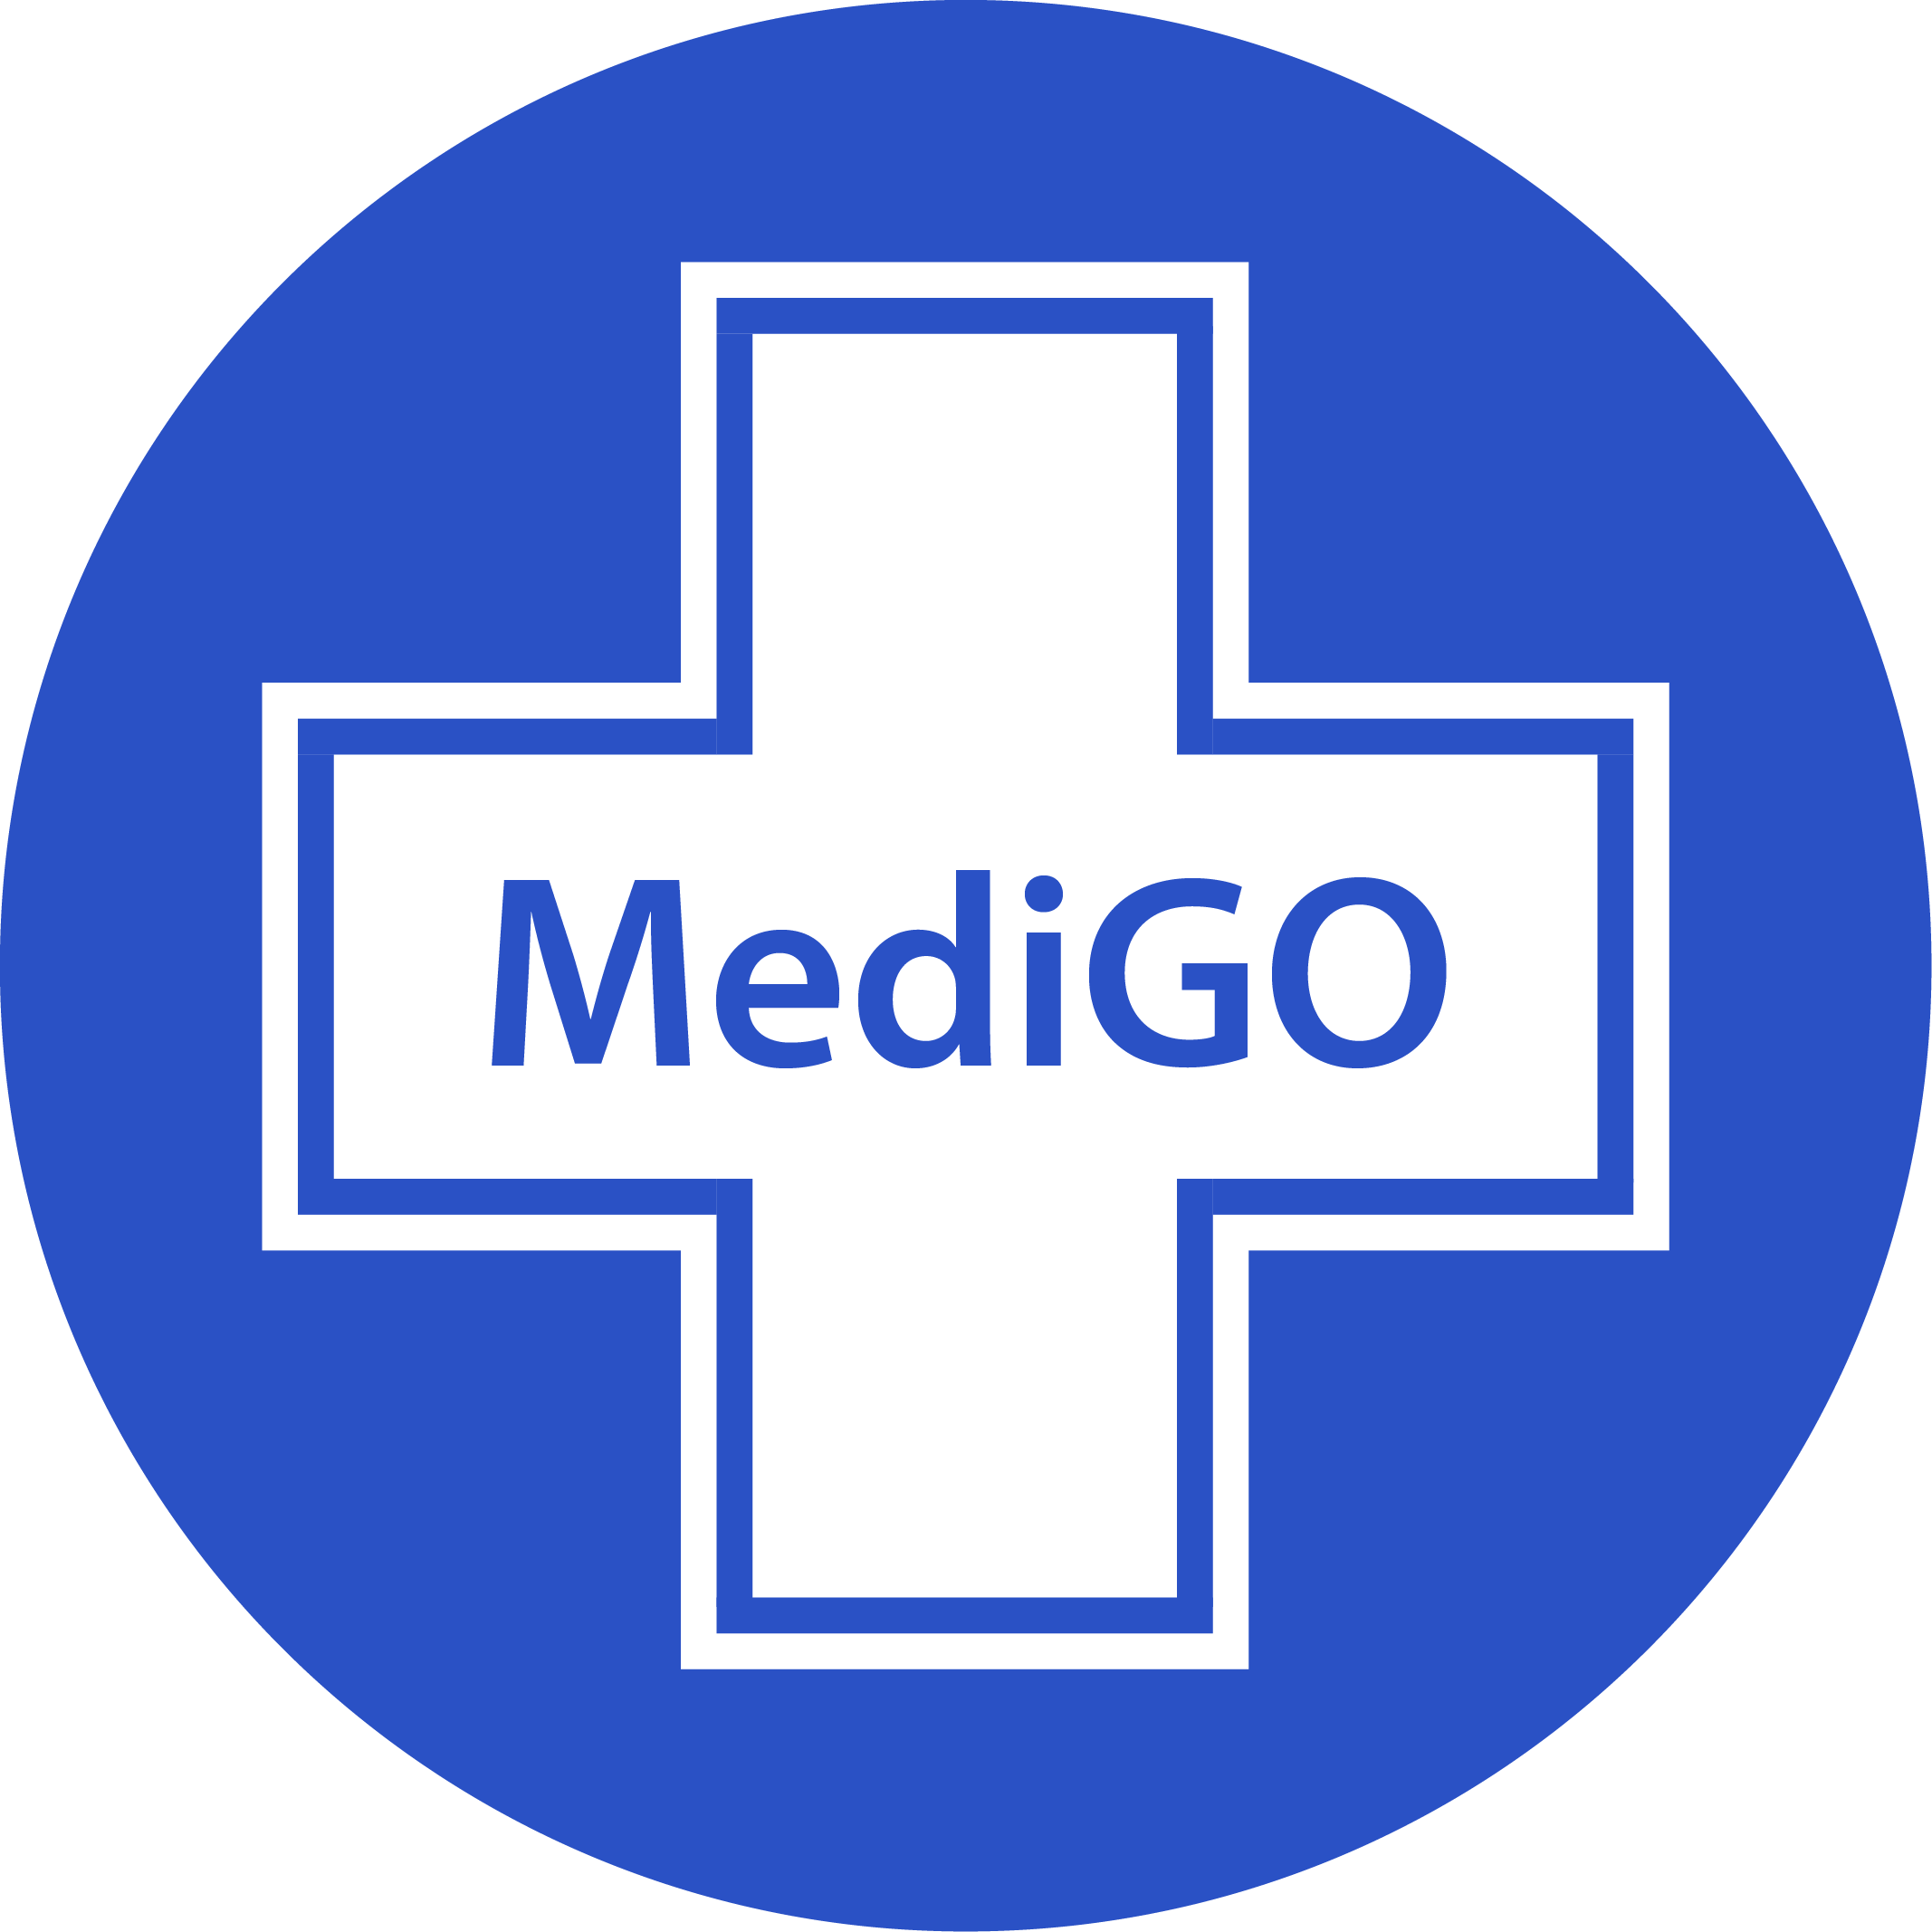 File:MedigGO round symbol.png